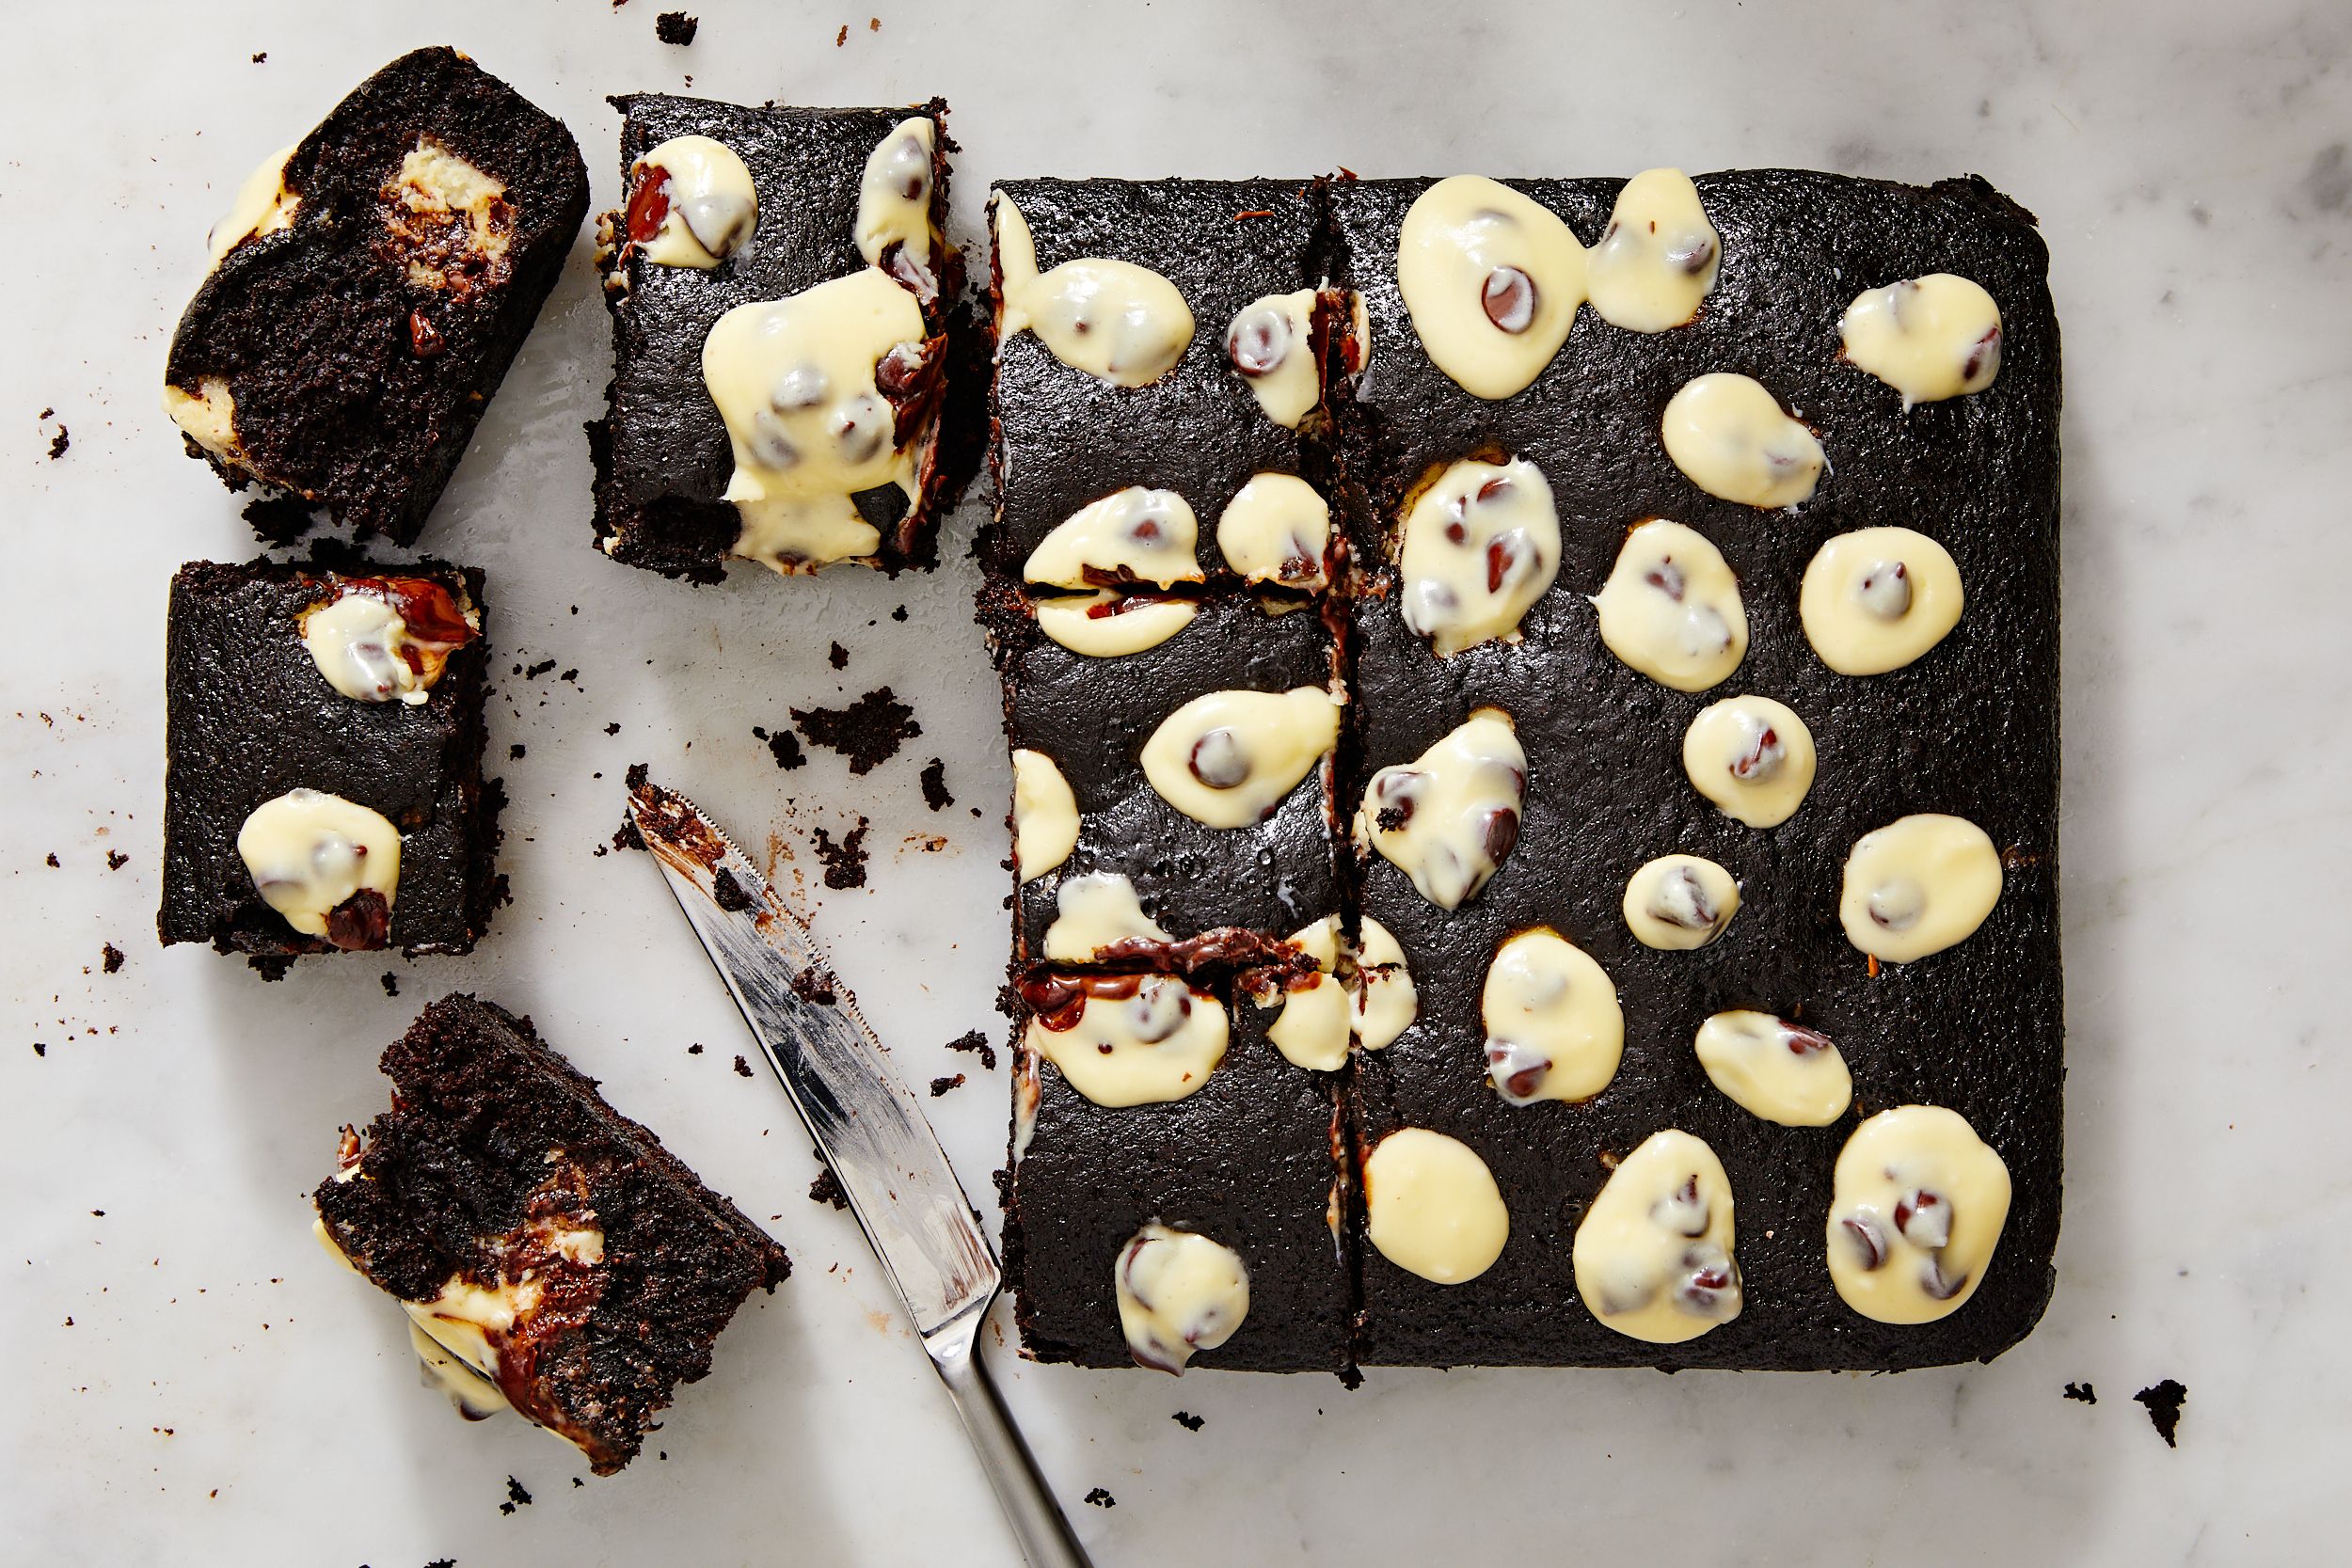 Best Chocolate Polka Dot Cake Recipe - How To Make Chocolate Cake